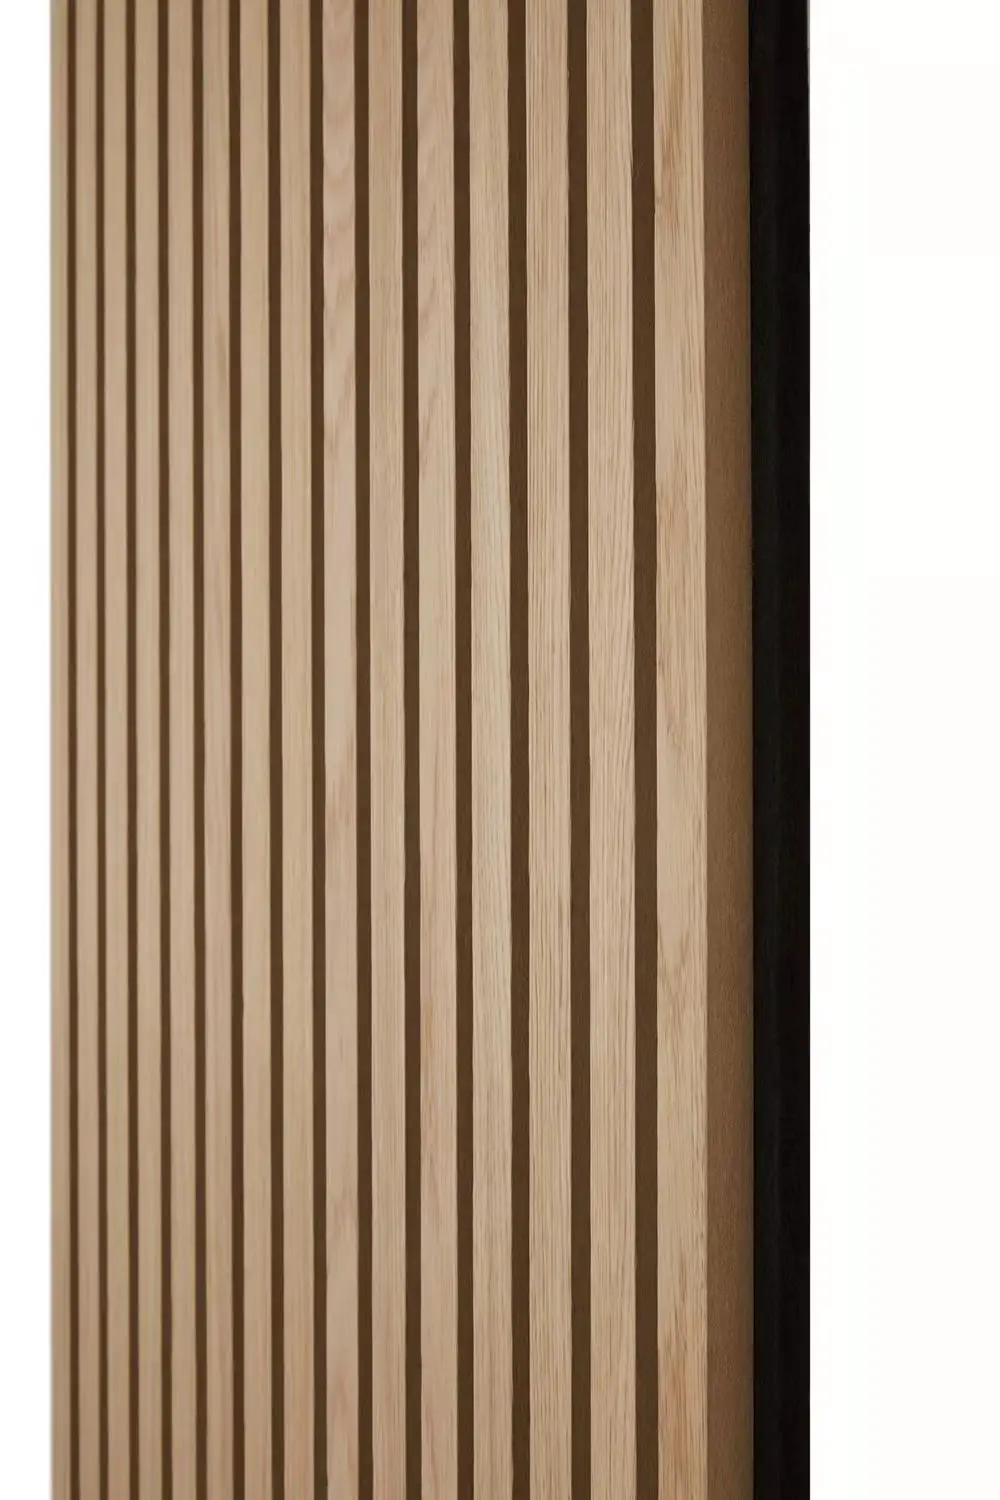 Natural Walnut and Oak Acoustic Slat Wooden Wall Panels